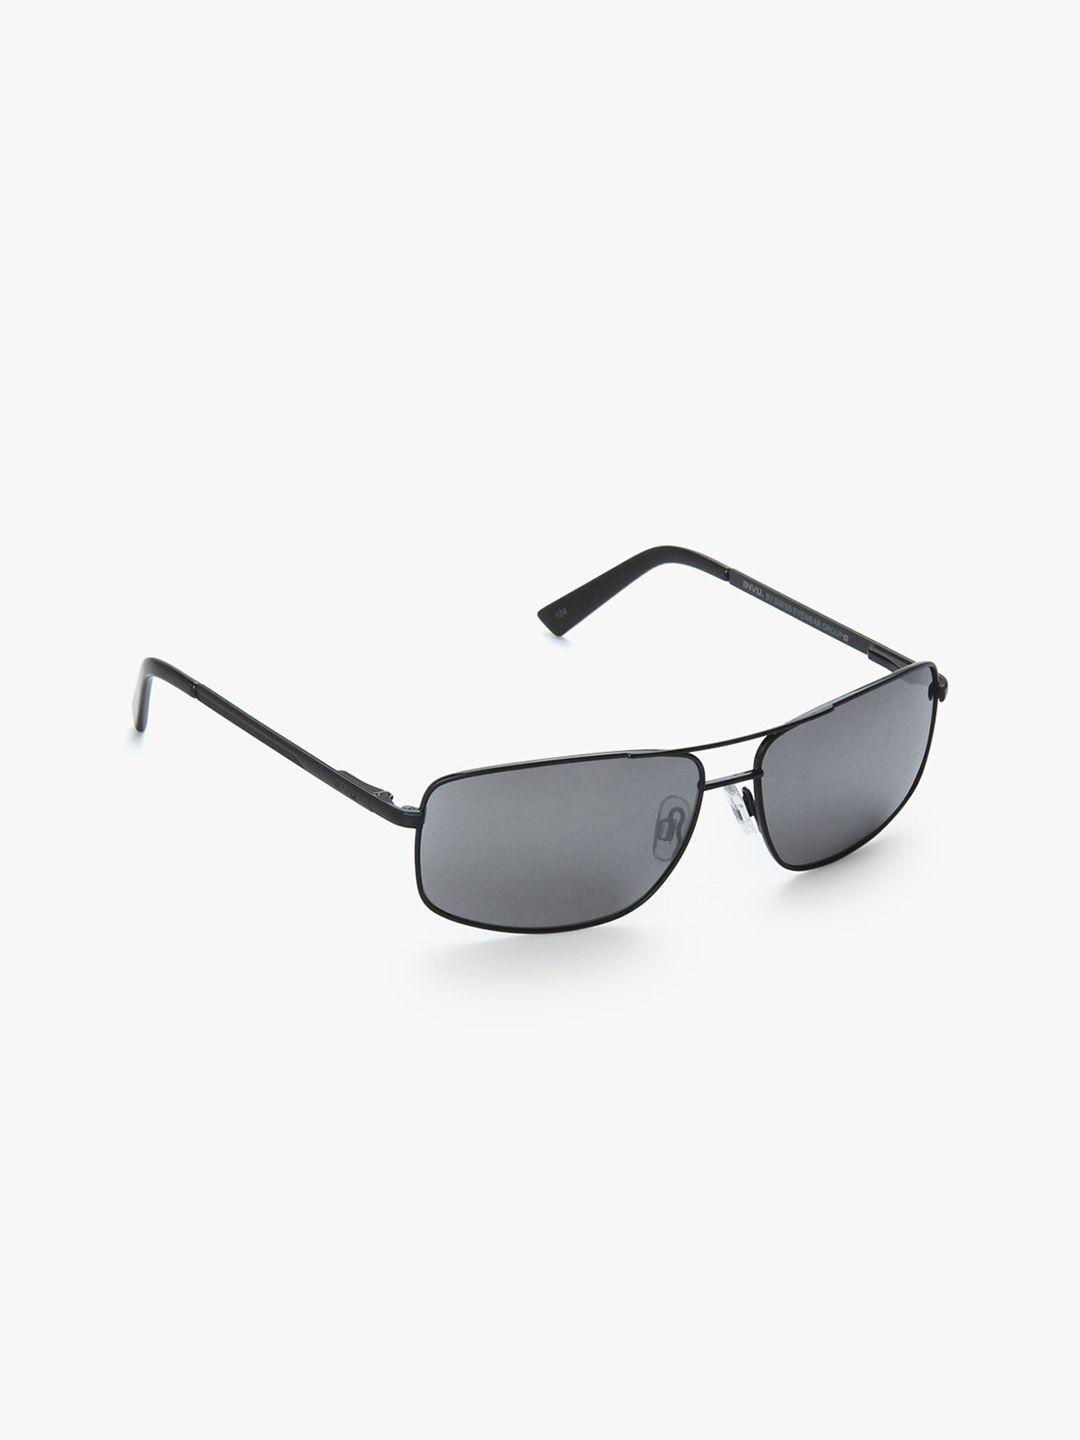 invu unisex grey lens & black sunglasses with polarised and uv protected lens b1505c